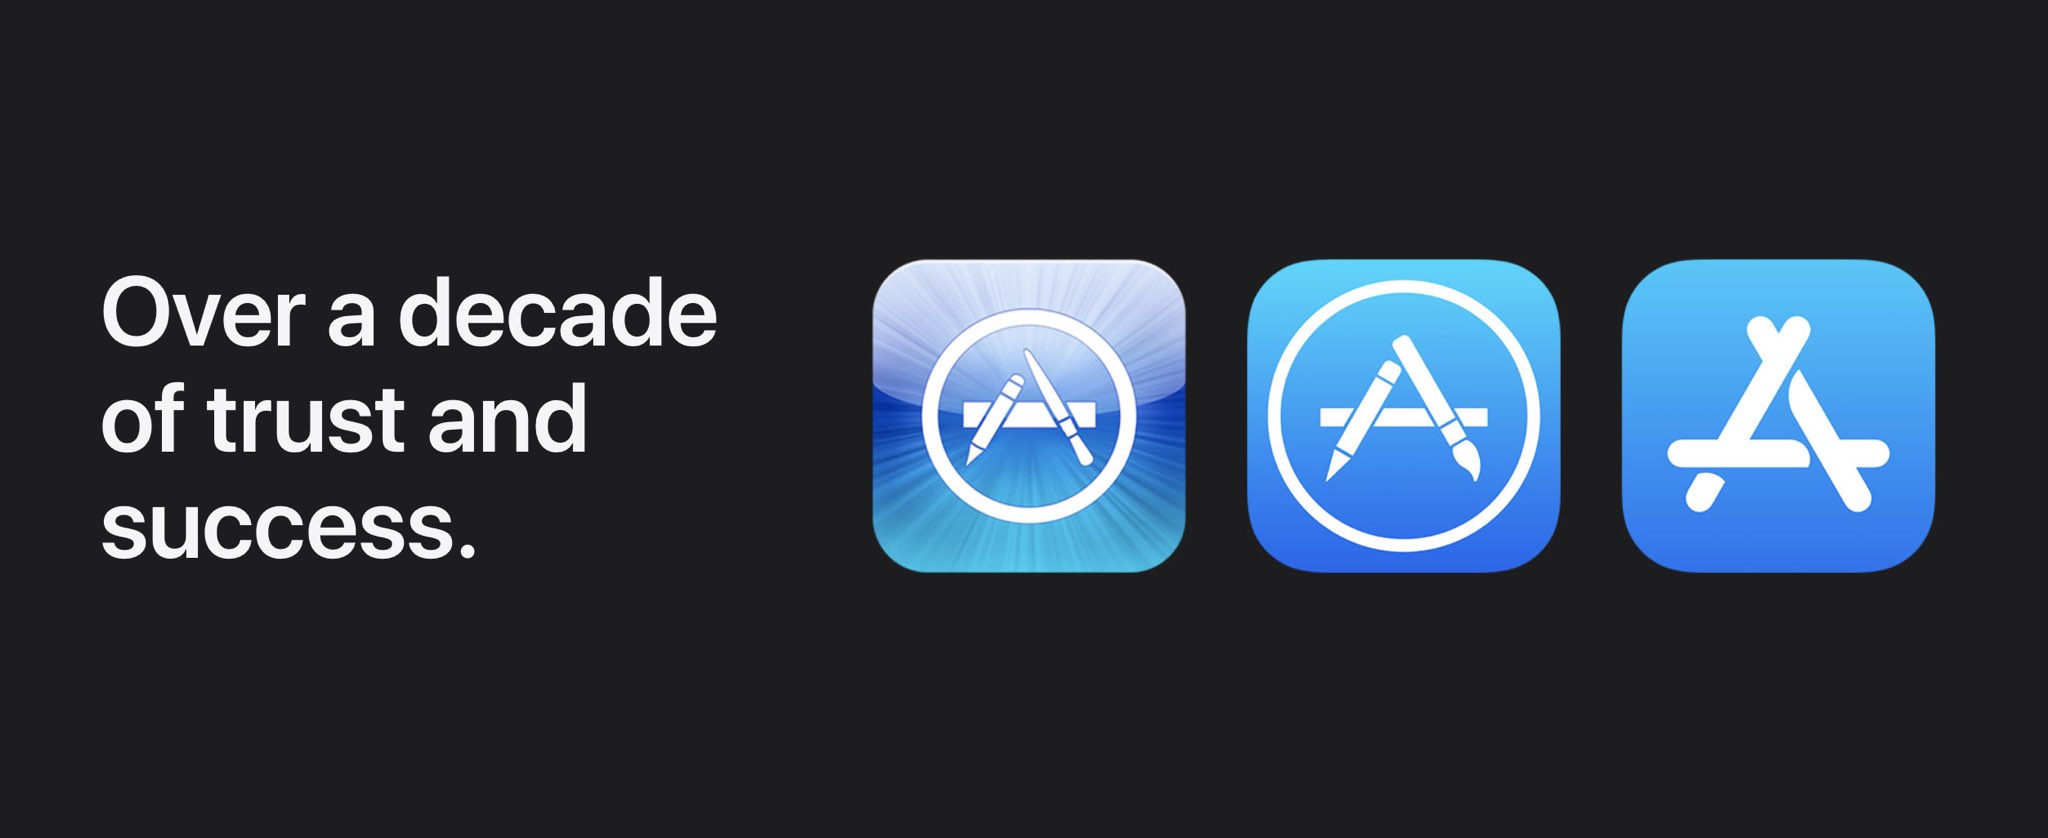 Marketing image showcasing the App Store icons